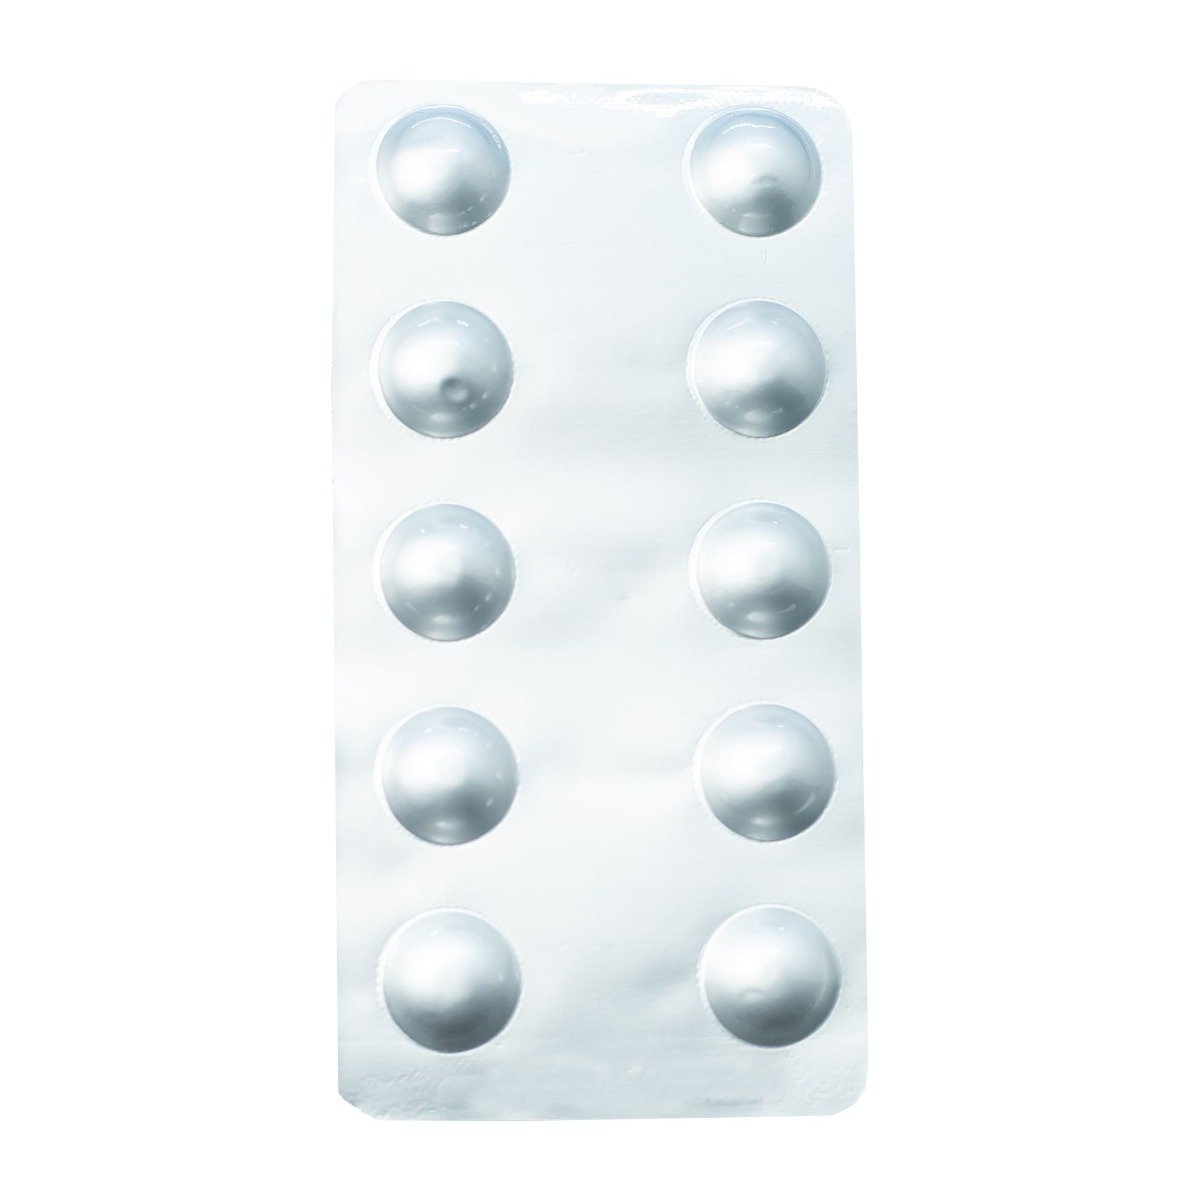 Zanoglide 4 mg-30 mg - 30 Tablets - Bloom Pharmacy